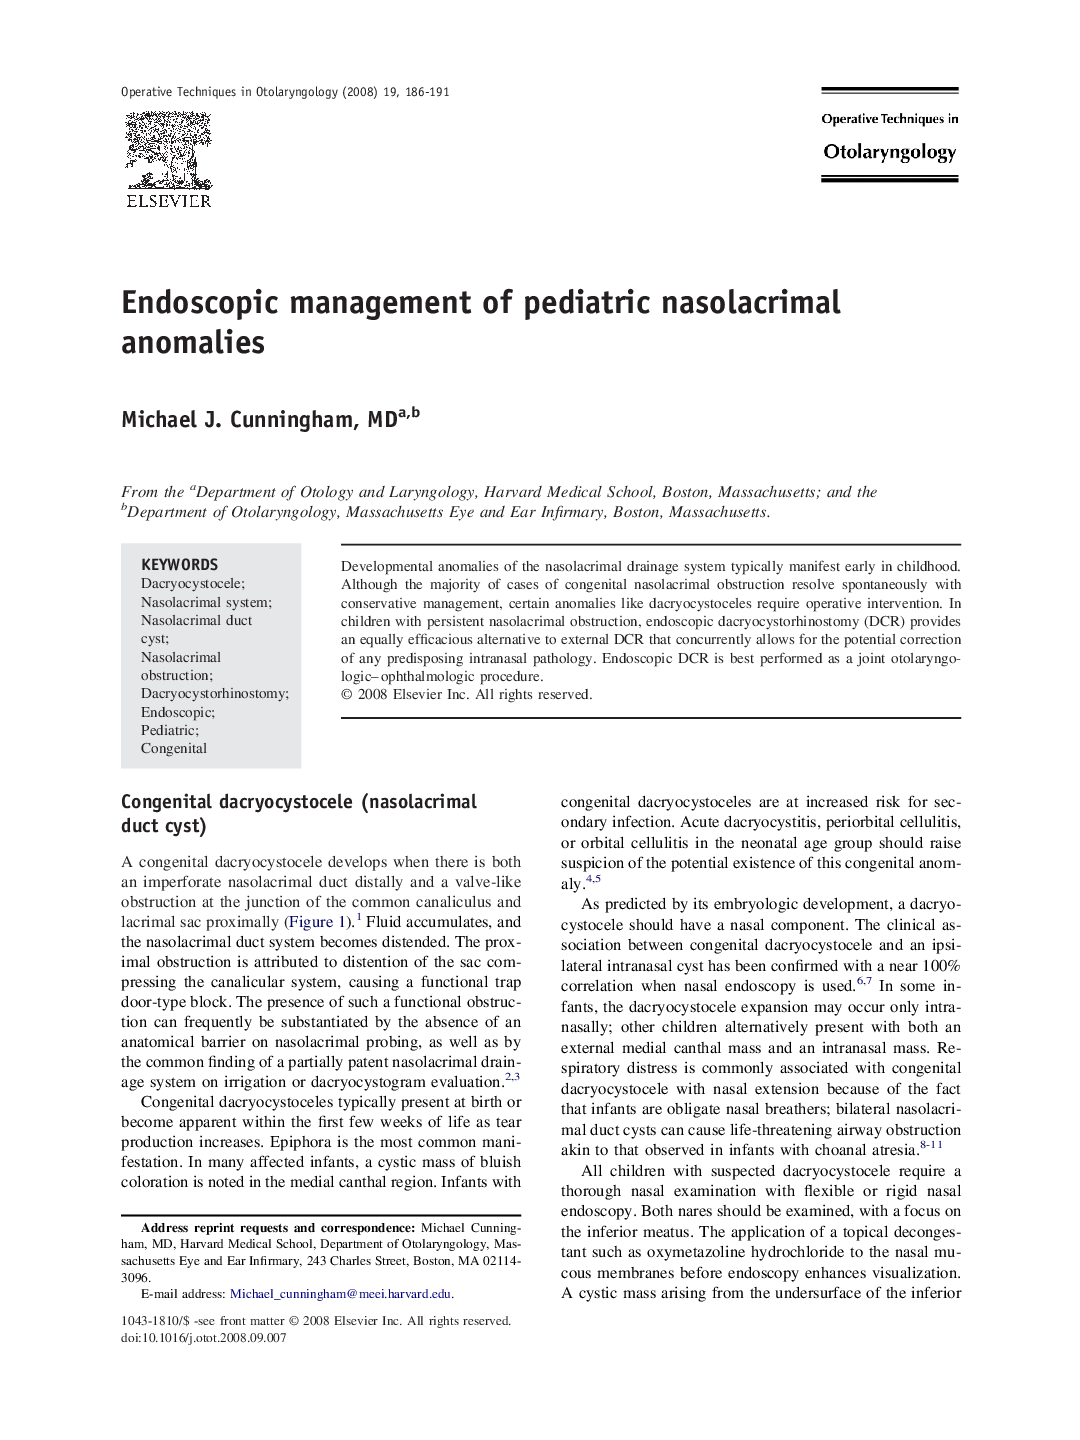 Endoscopic management of pediatric nasolacrimal anomalies